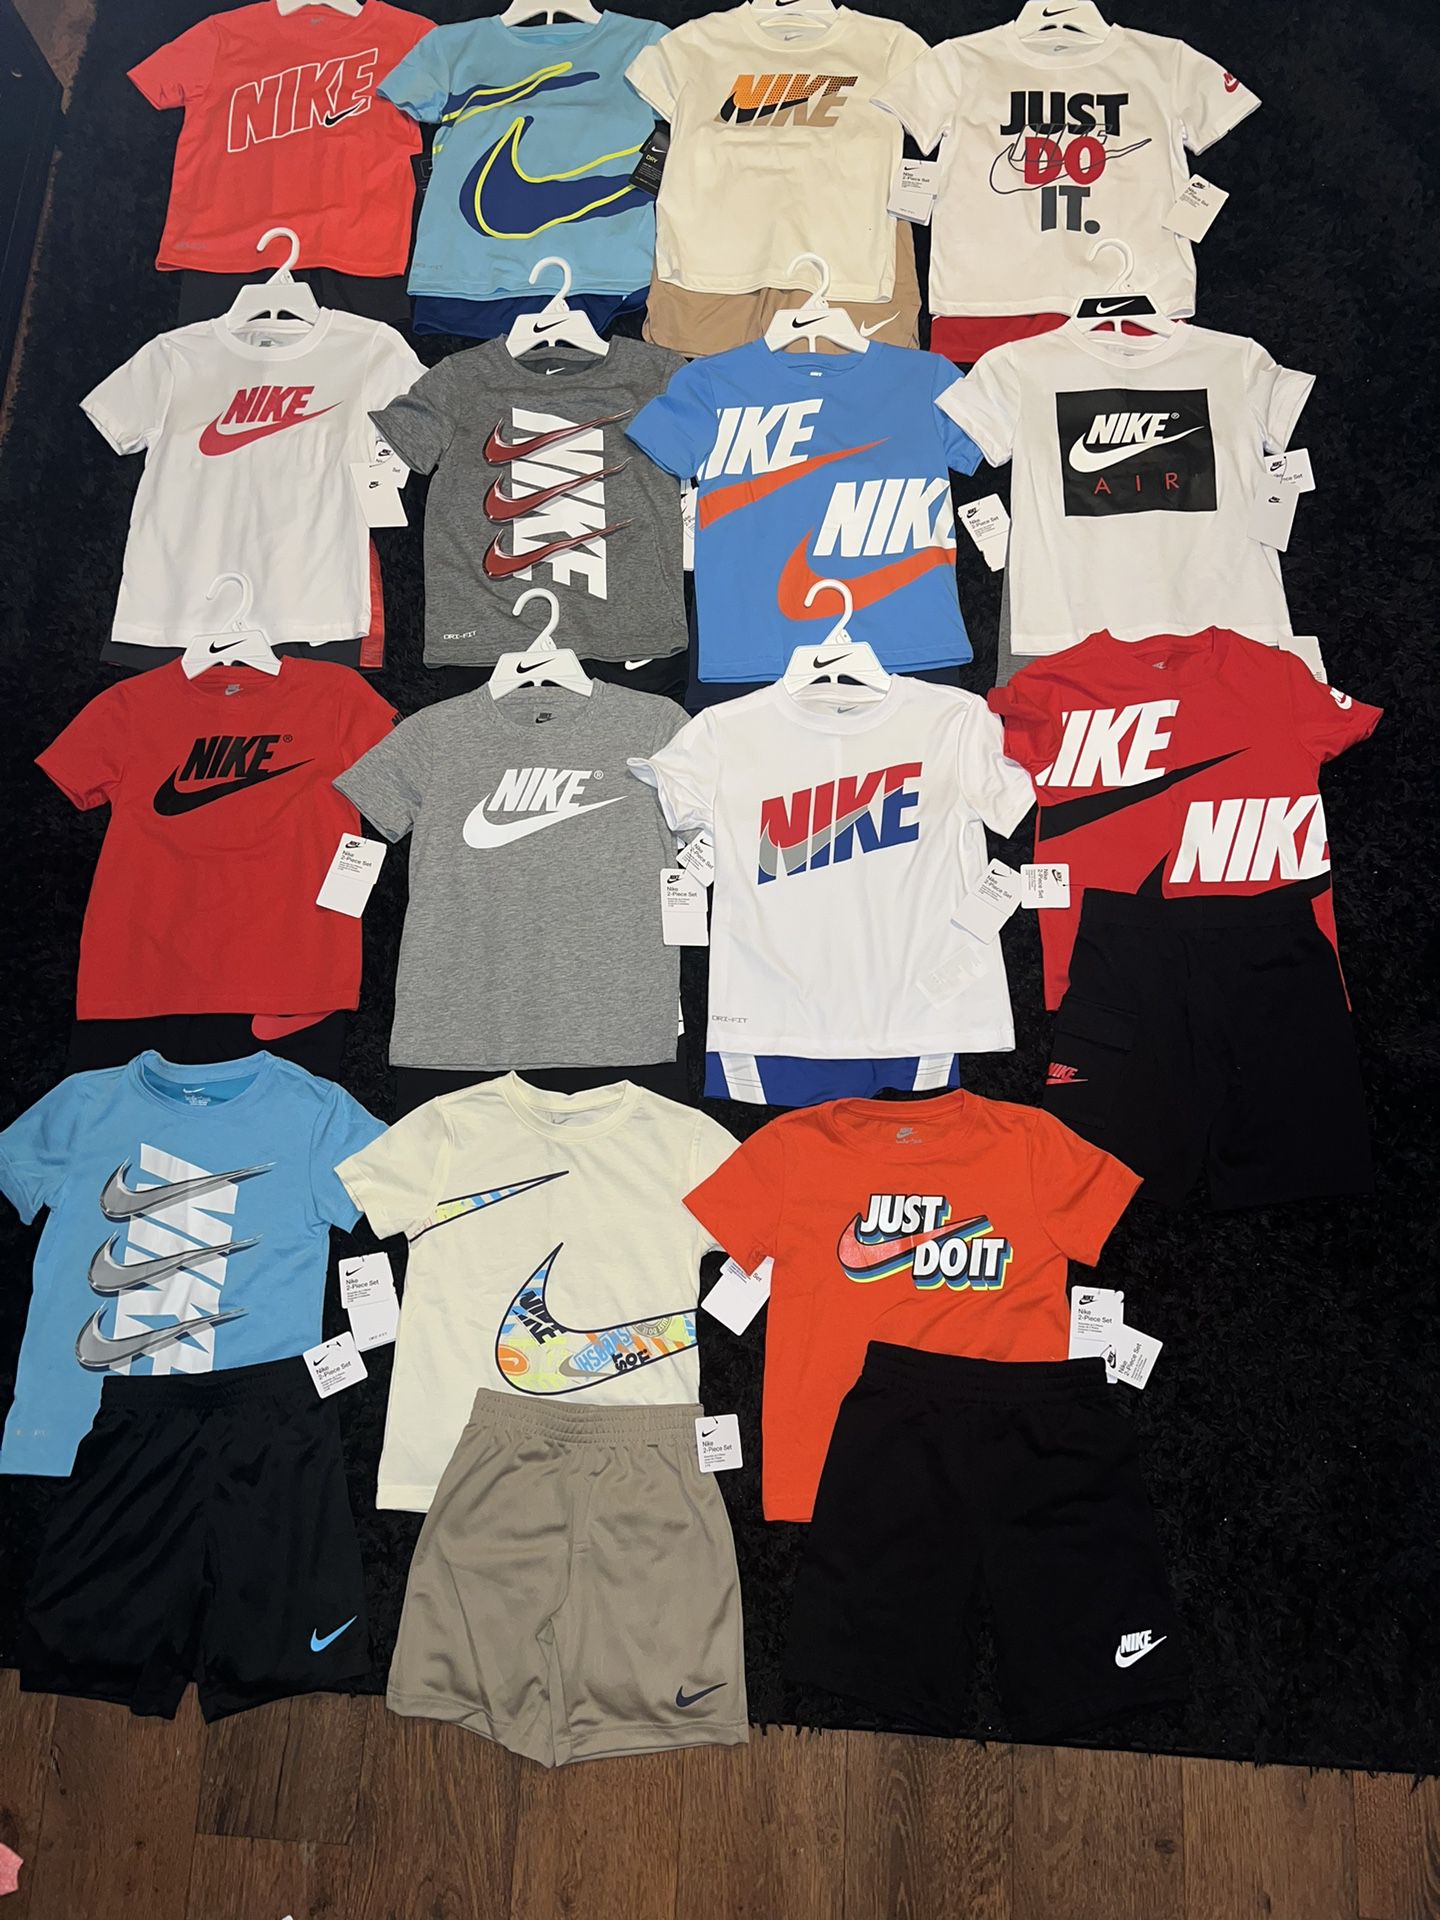 NWT Nike size 6(15 Outfits)